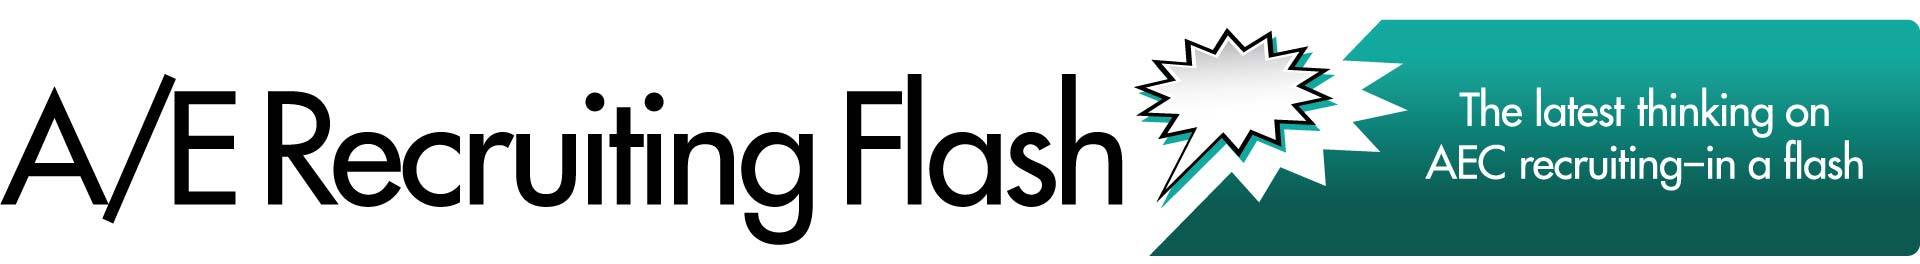 A/E Recruiting Flash